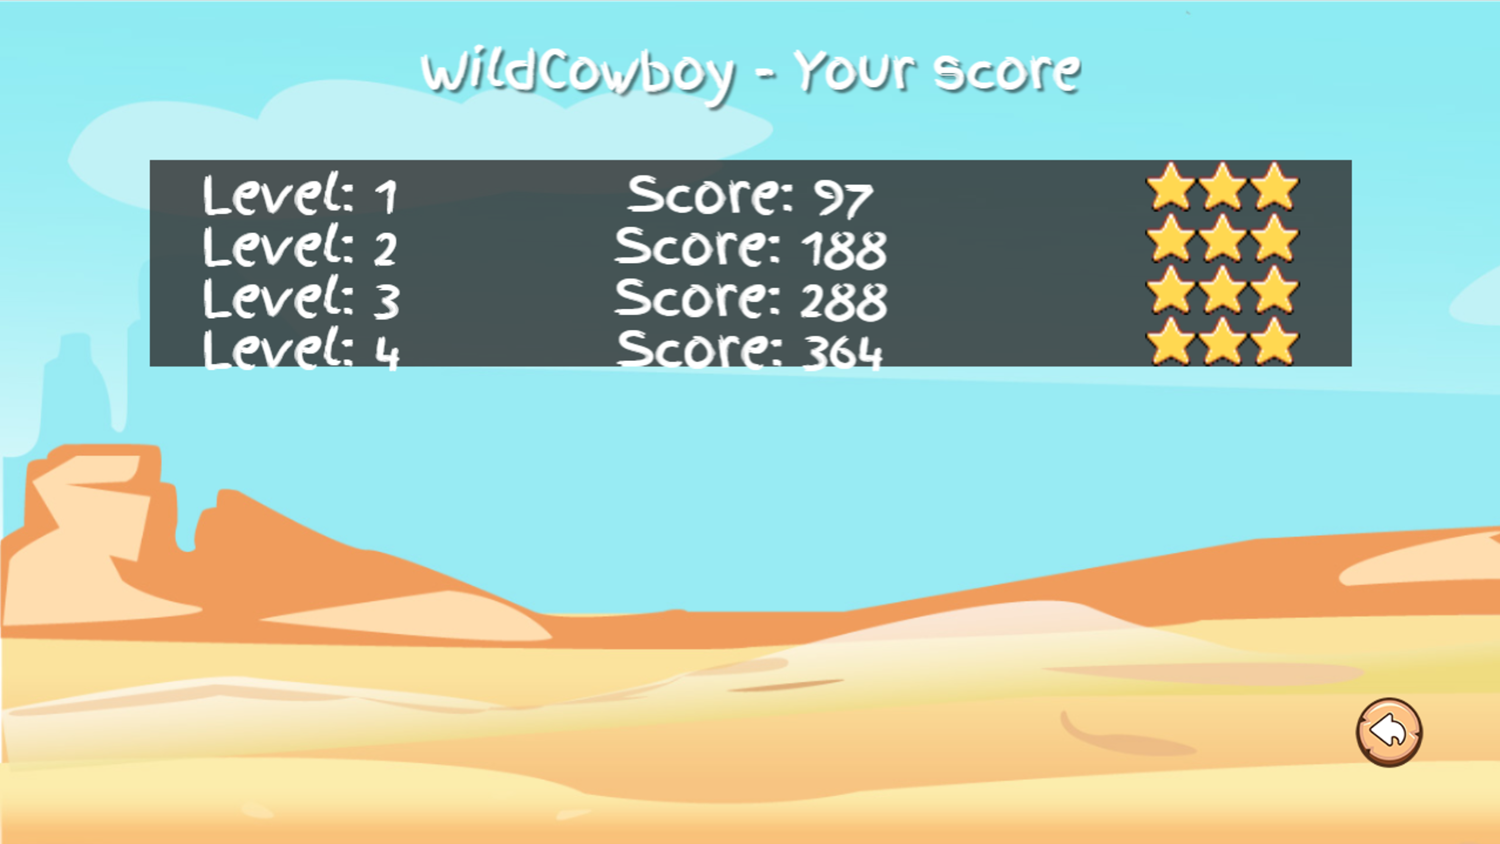 Wild Cowboy High Scores Screenshot.